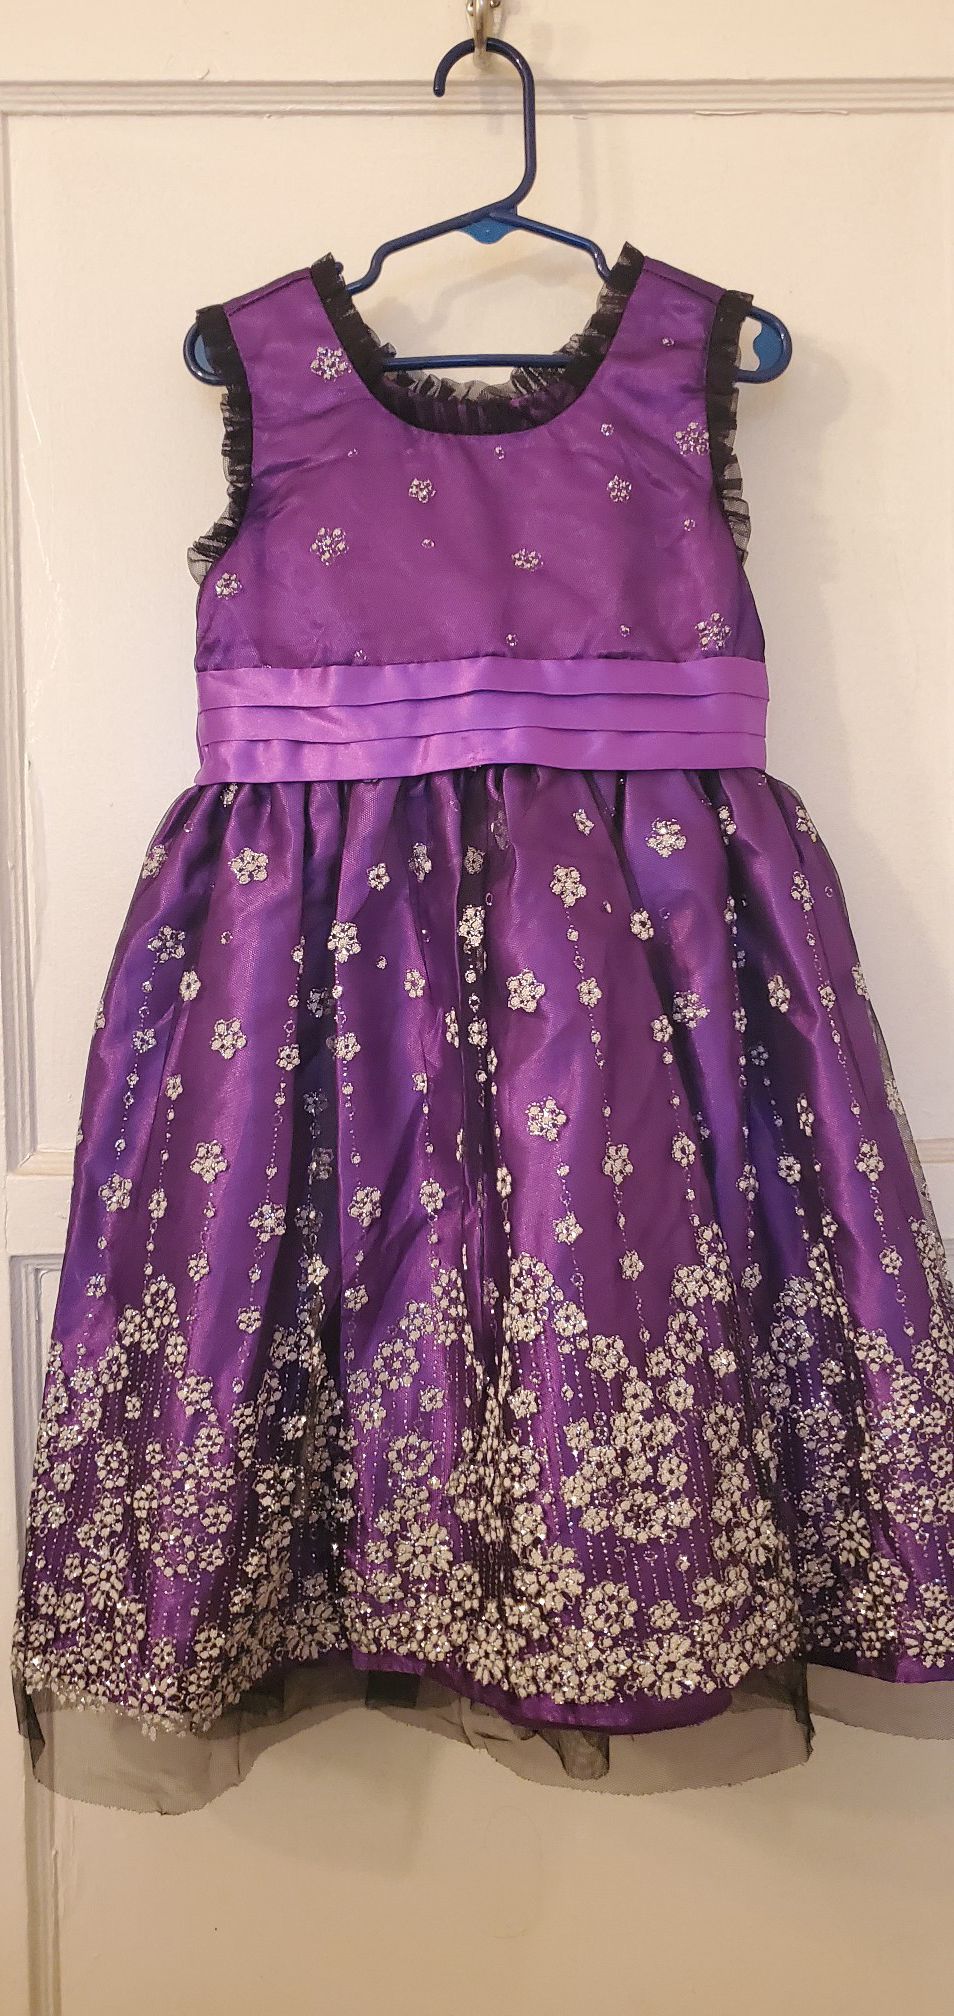 Purple dress with sparkle flowers size 6